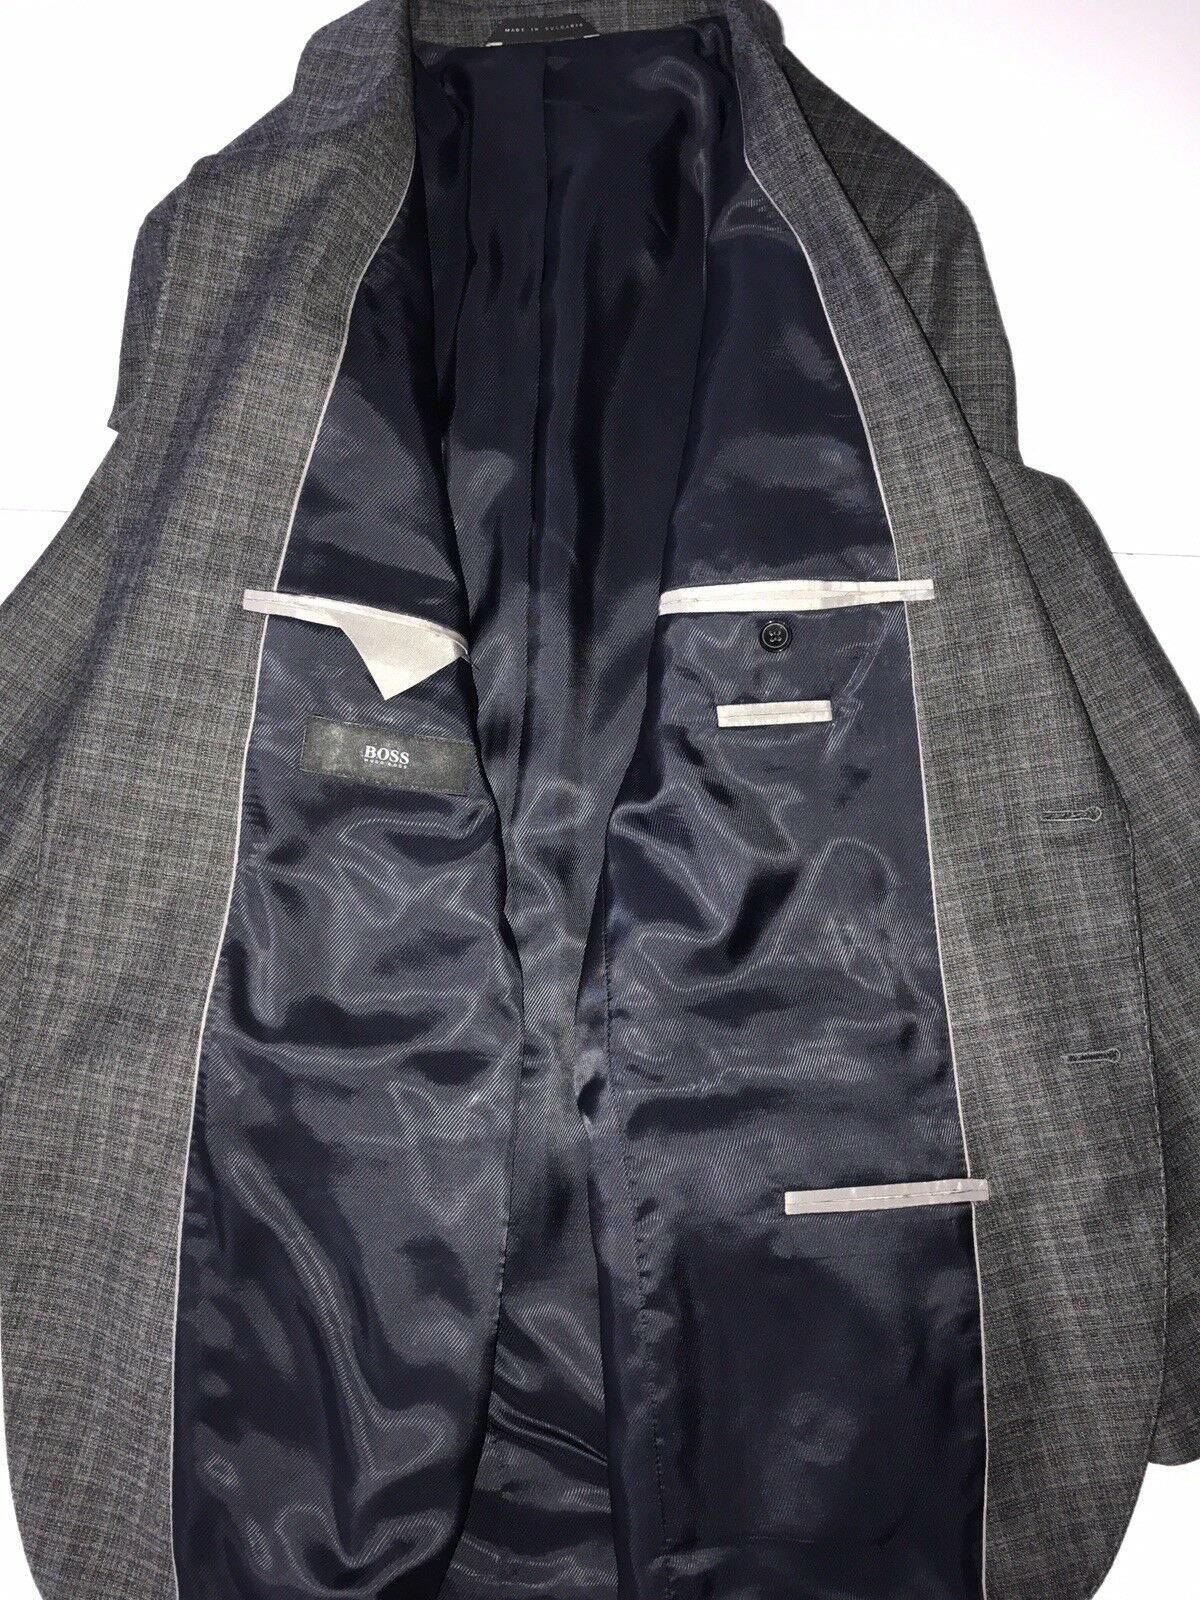 NWT $645 Boss Hugo Boss James4 Open Blue Sport Coat Jacket Size 38R US